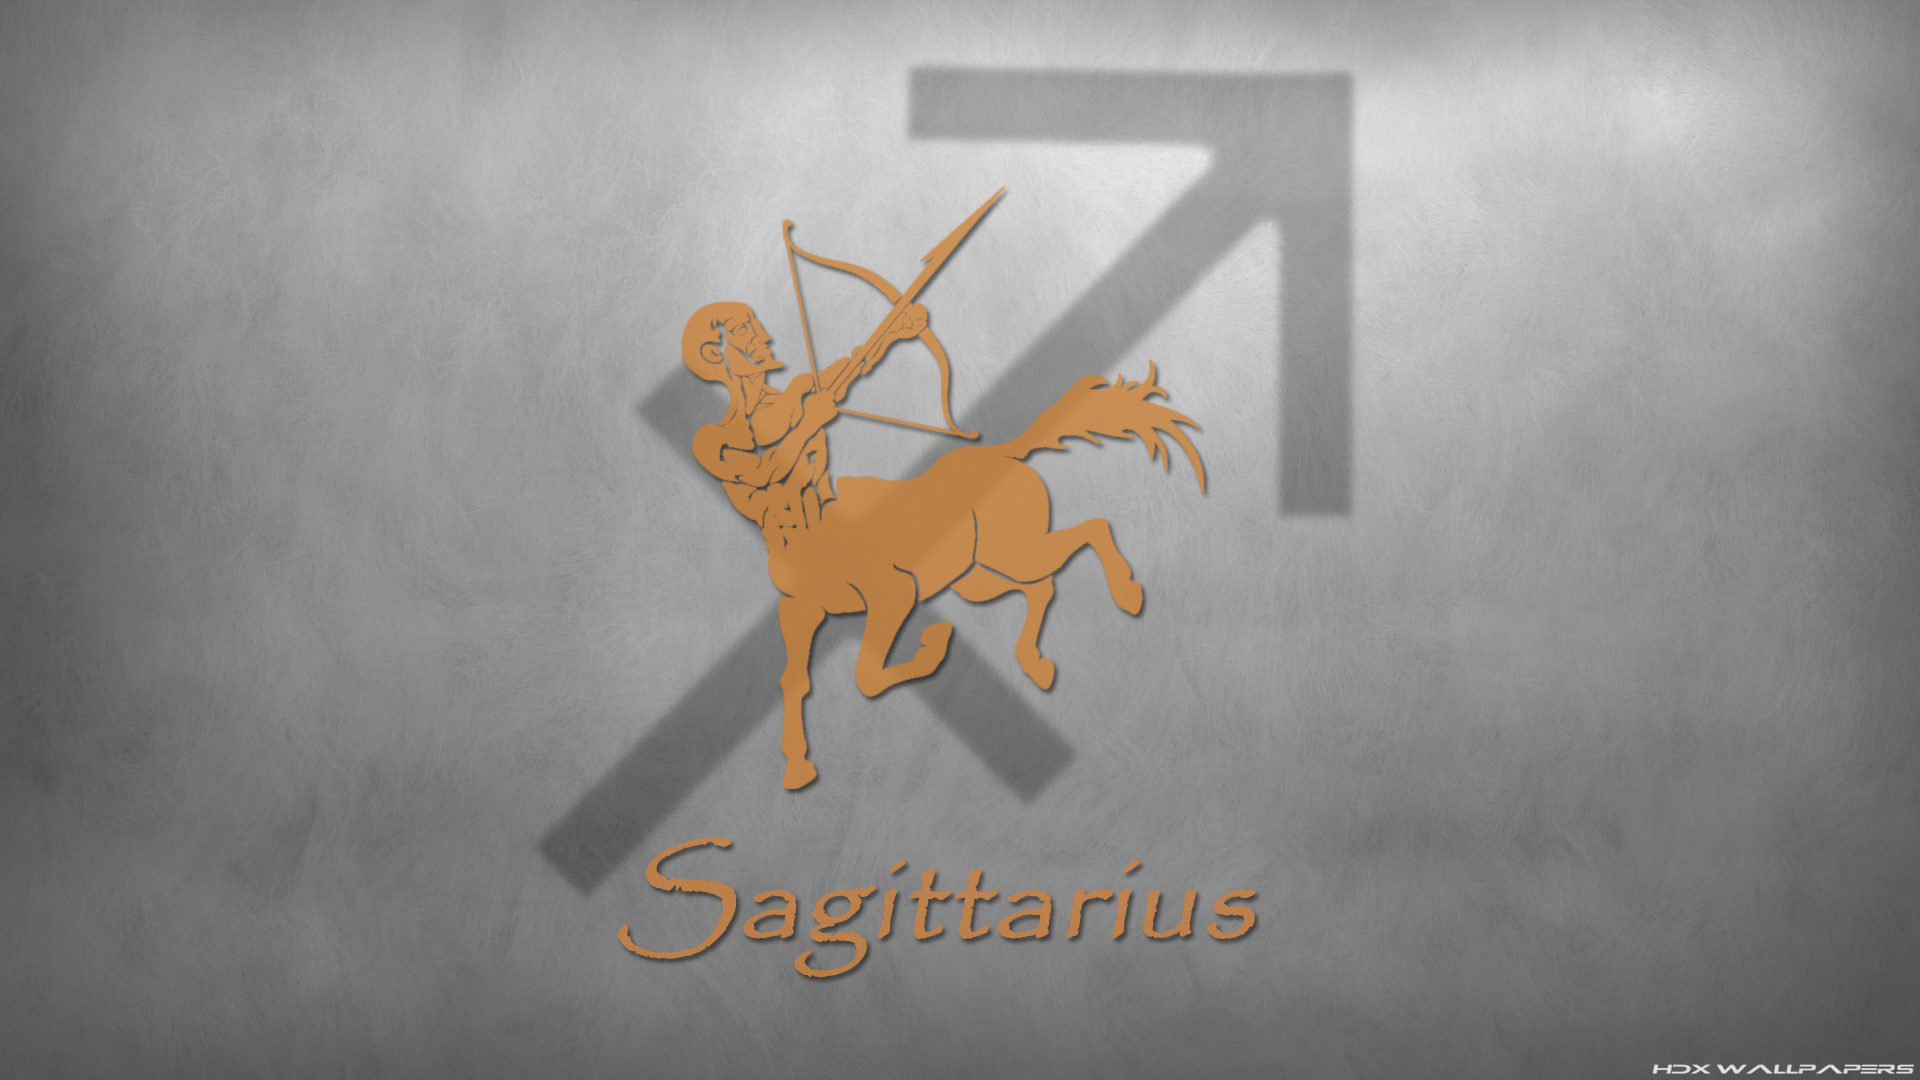 Zodiac sign Sagittarius wallpaper and image, picture, photo